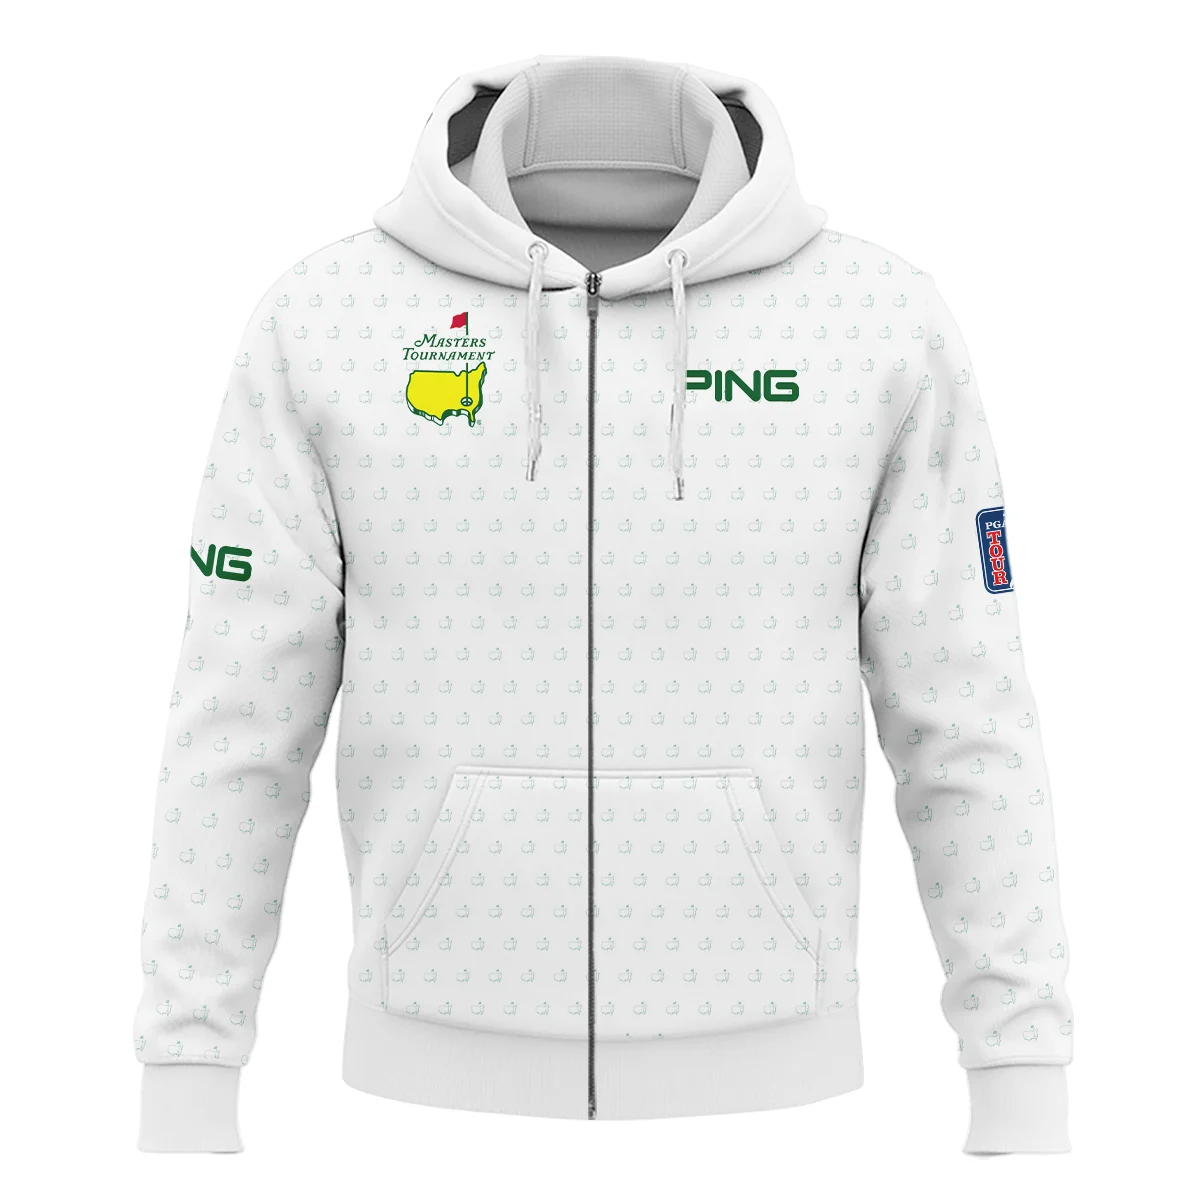 Masters Tournament Golf Ping Unisex Sweatshirt Logo Pattern White Green Golf Sports All Over Print Sweatshirt